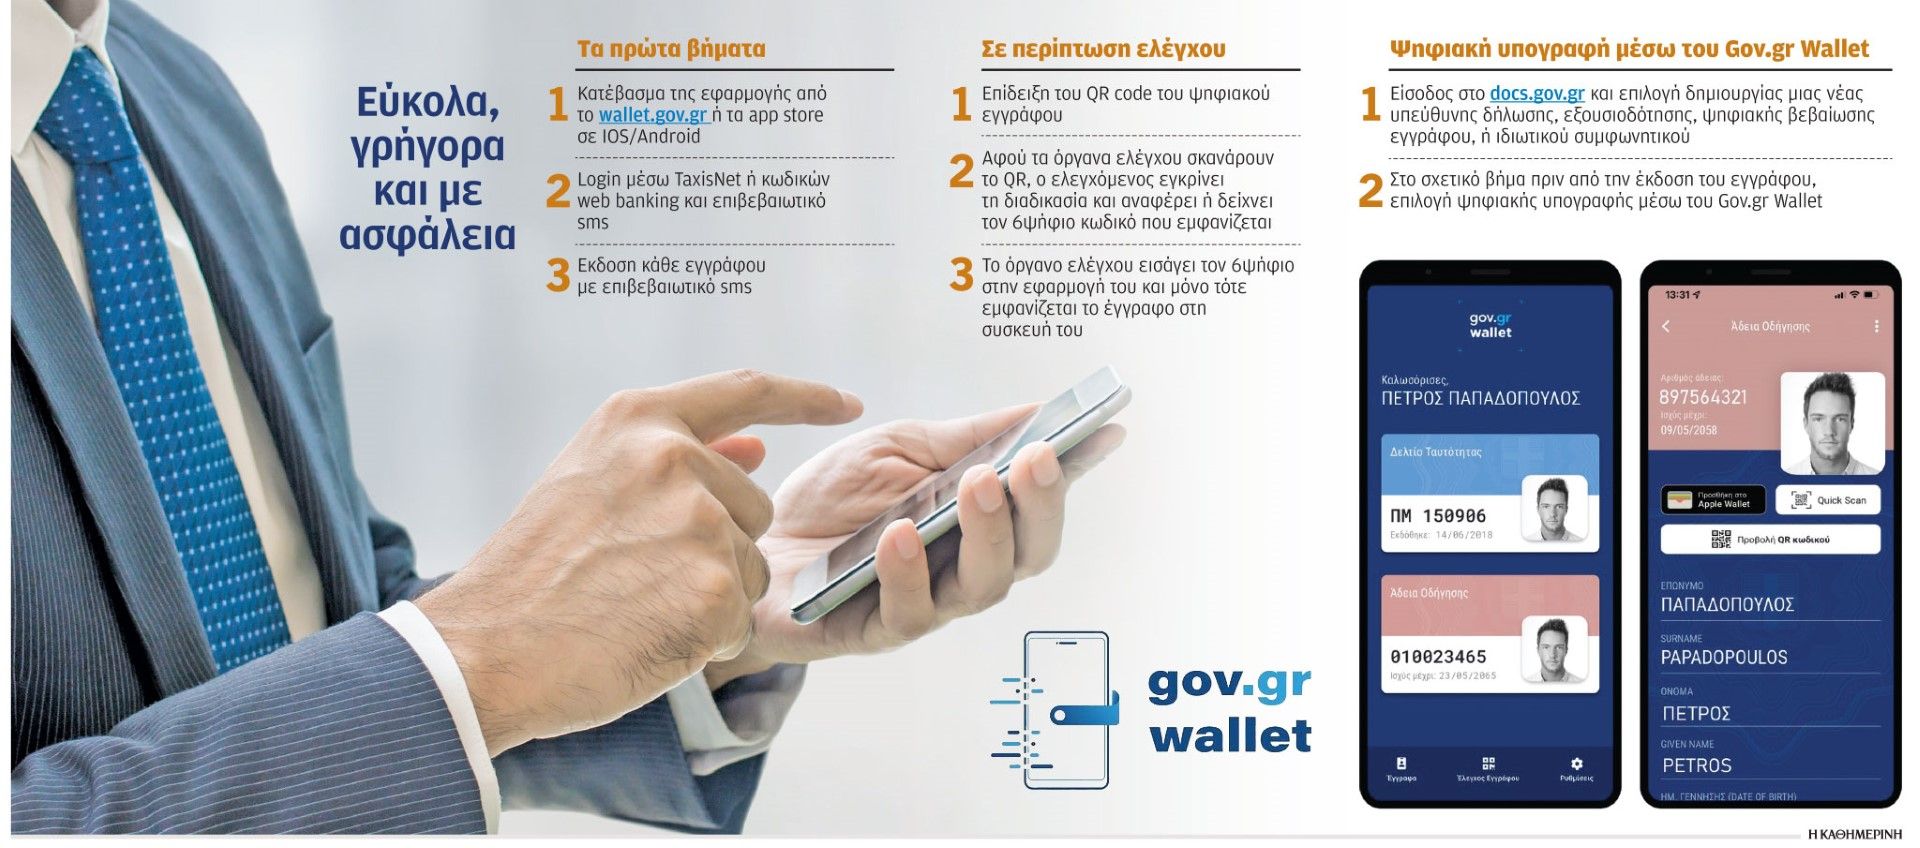 Gov.gr Wallet: Όσα πρέπει να ξέρετε για την νέα εφαρμογή